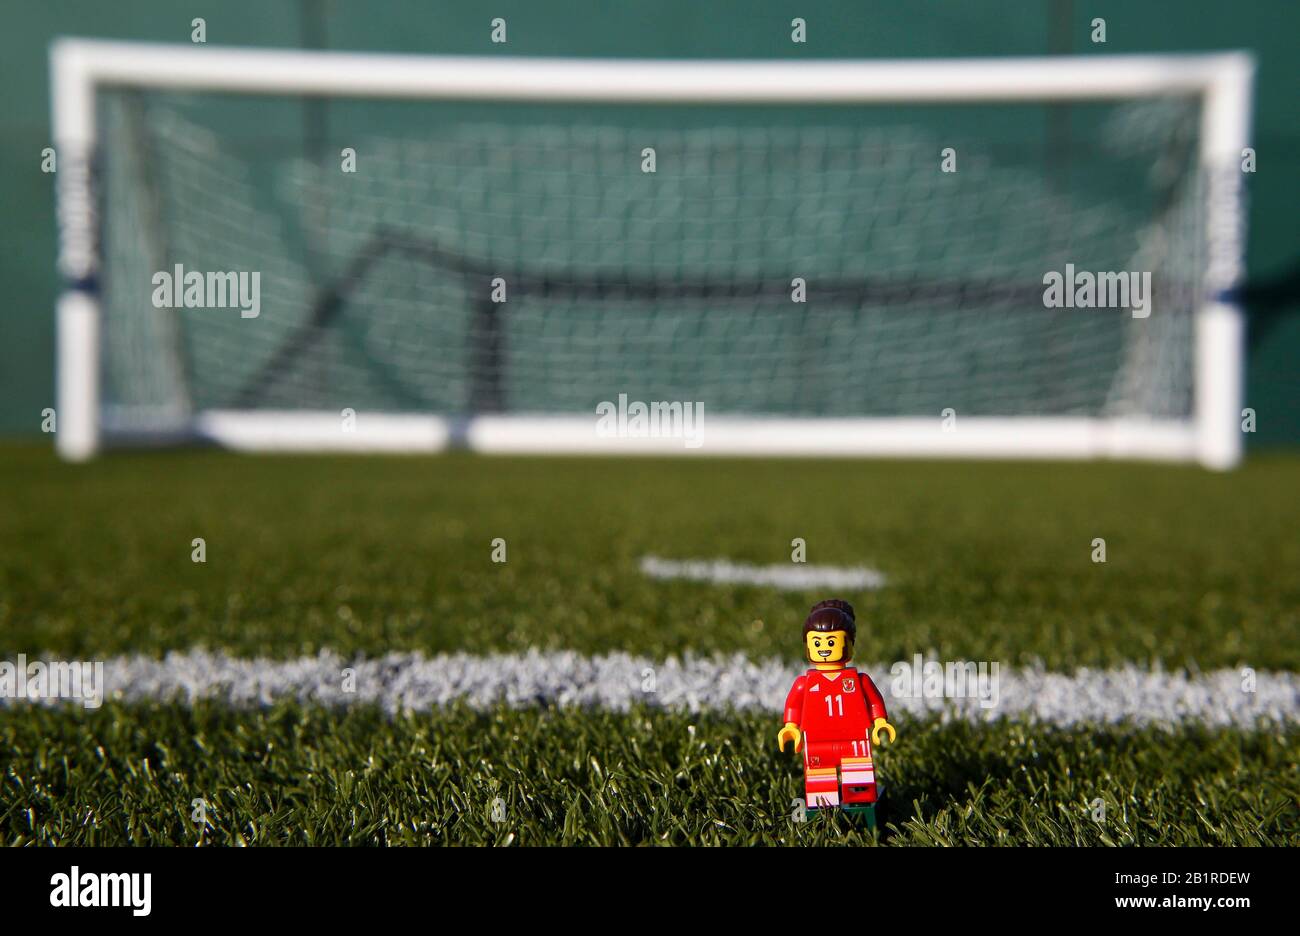 LEGO Football Player Figurine